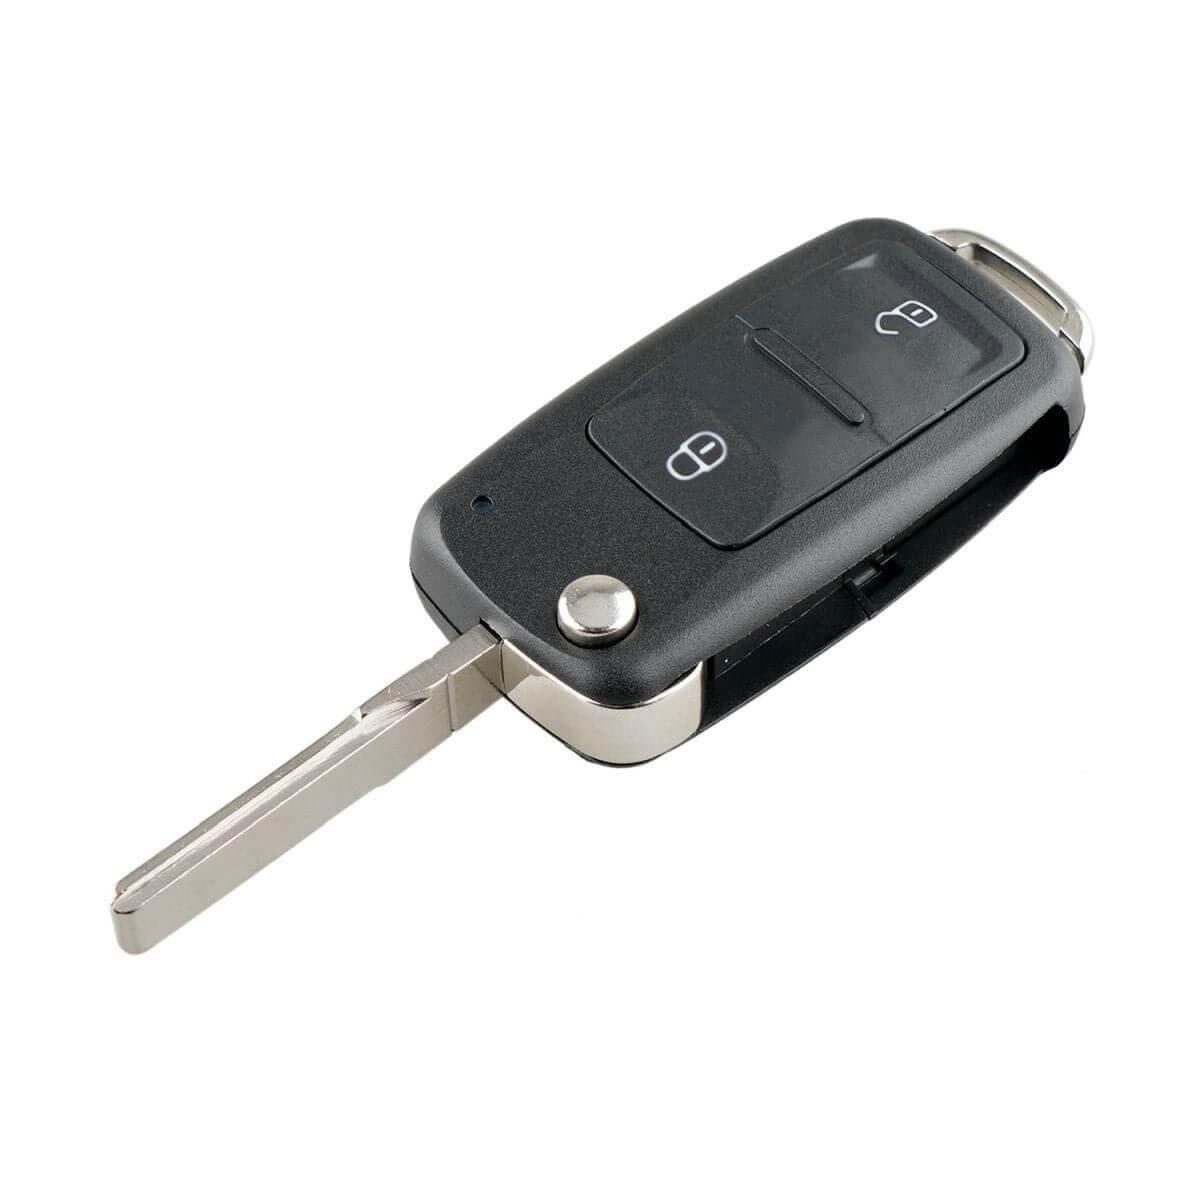 CAR ACESSORIES 888 Kućište auto ključa sa 2 tastera VW2BTS za Volkswagen E61-AP000